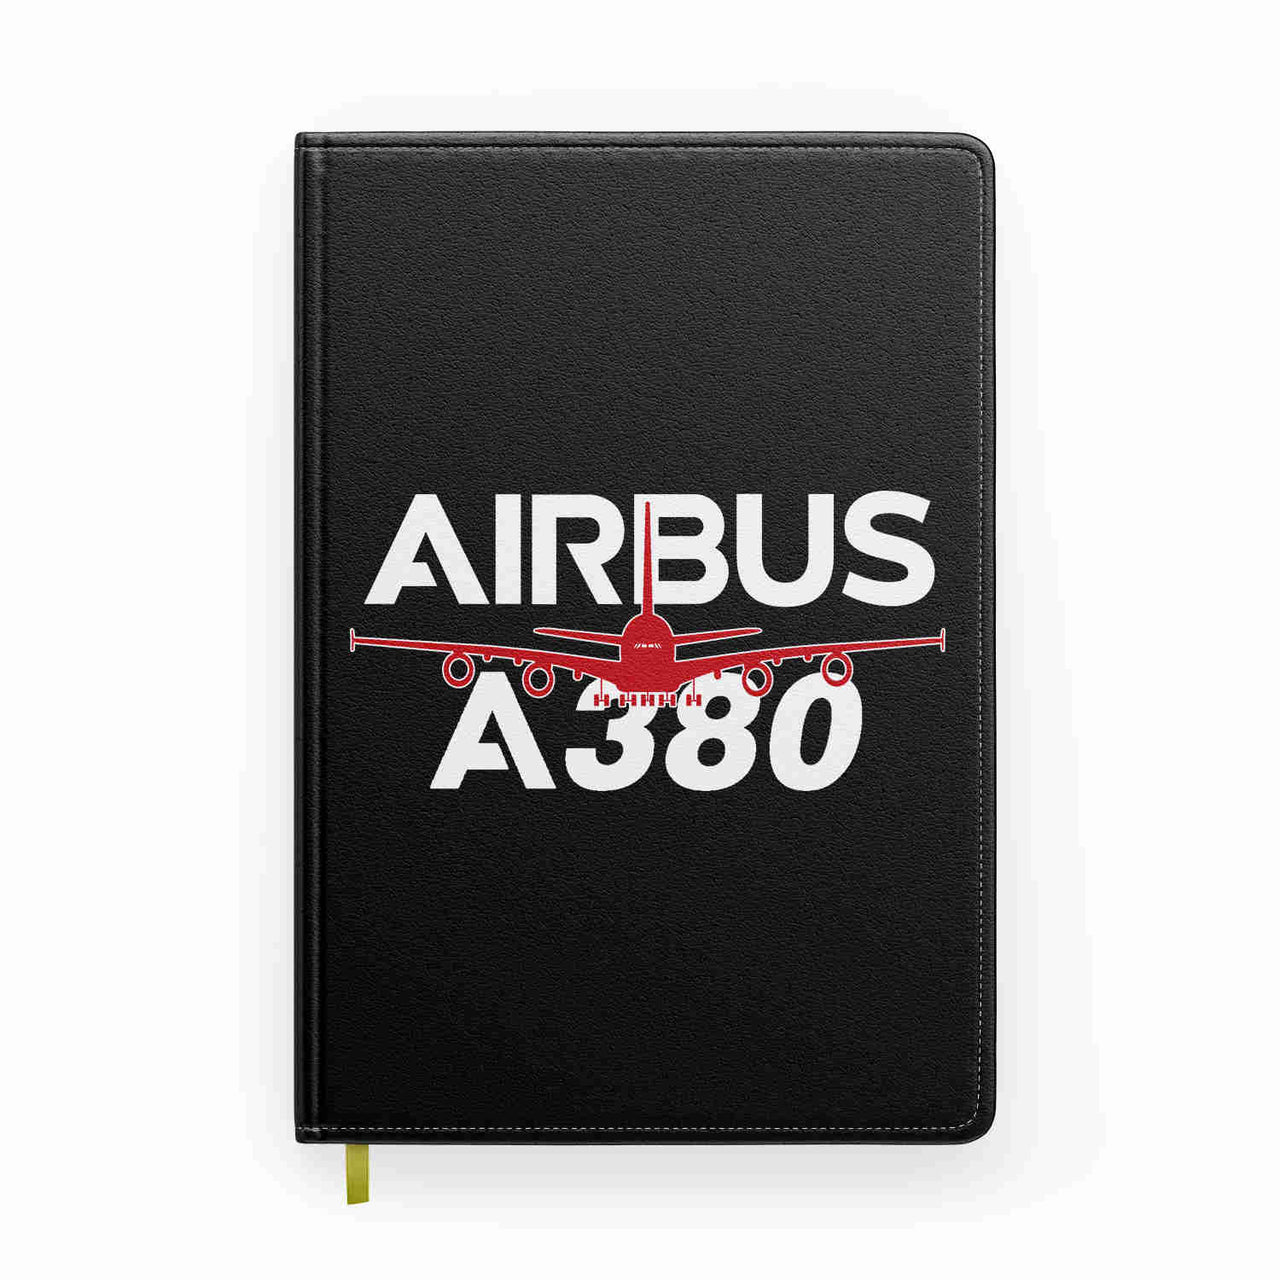 Amazing Airbus A380 Designed Notebooks